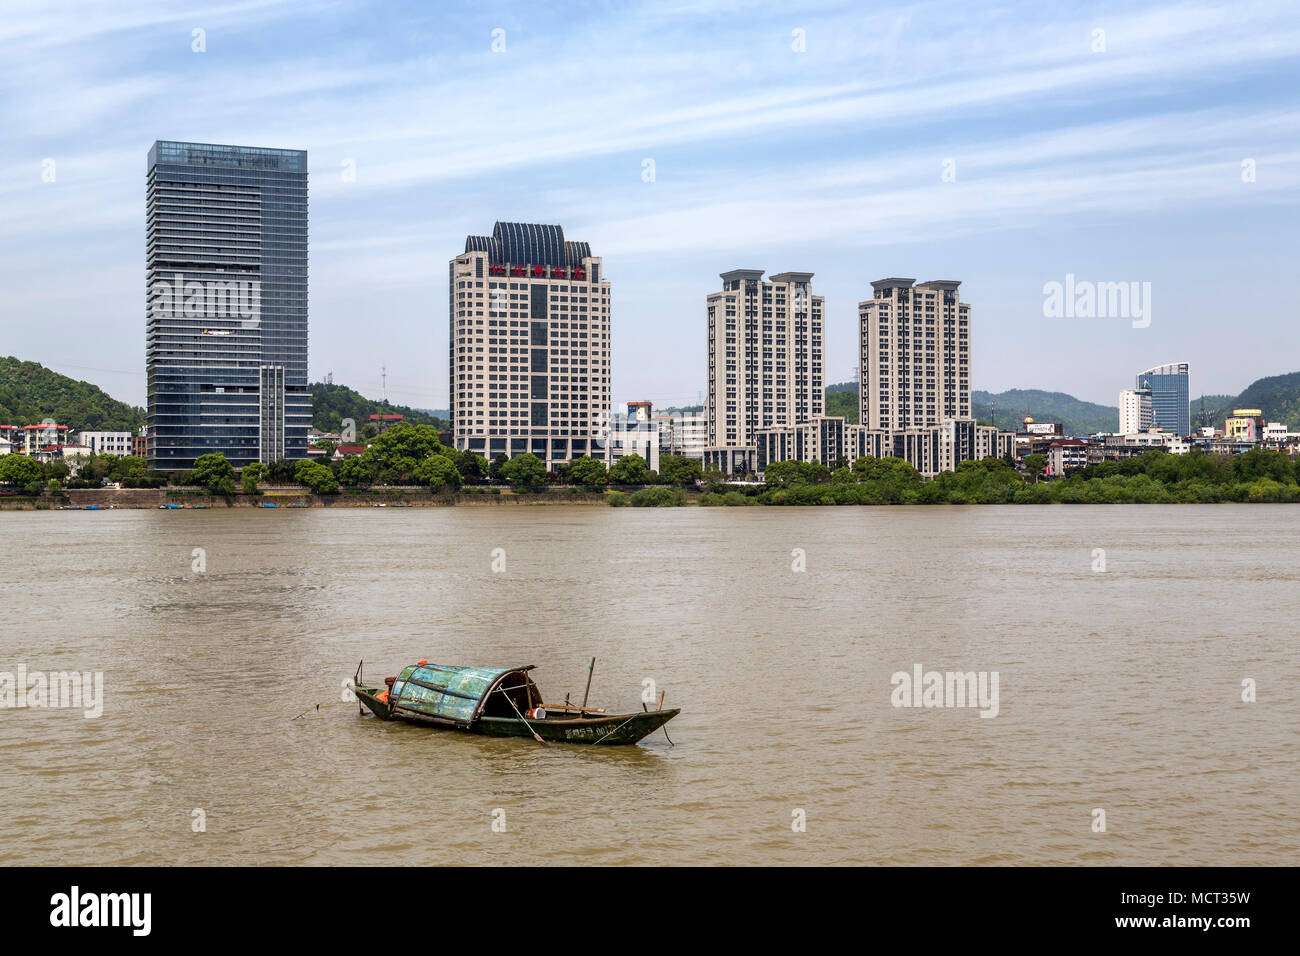 A sampan floats on the Fuchun River juxtaposed by a number of modern high rise buildings along the riverbank. Tonglu, Zhejiang Province, China. Stock Photo